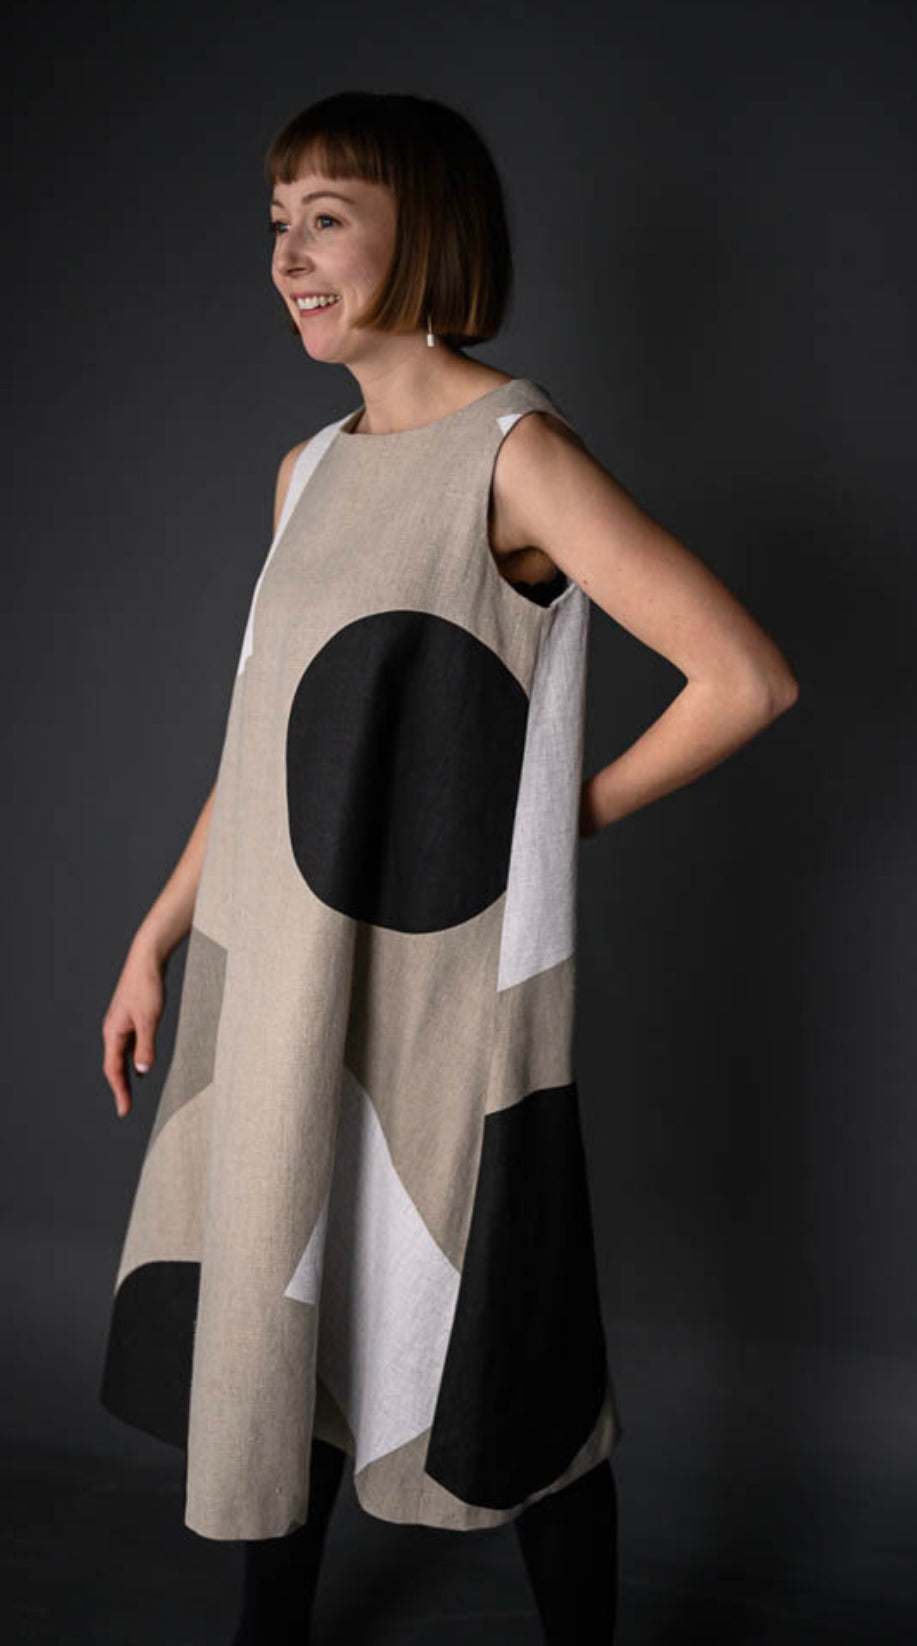 Merchant & Mills Trapeze Dress Paper Sewing Pattern